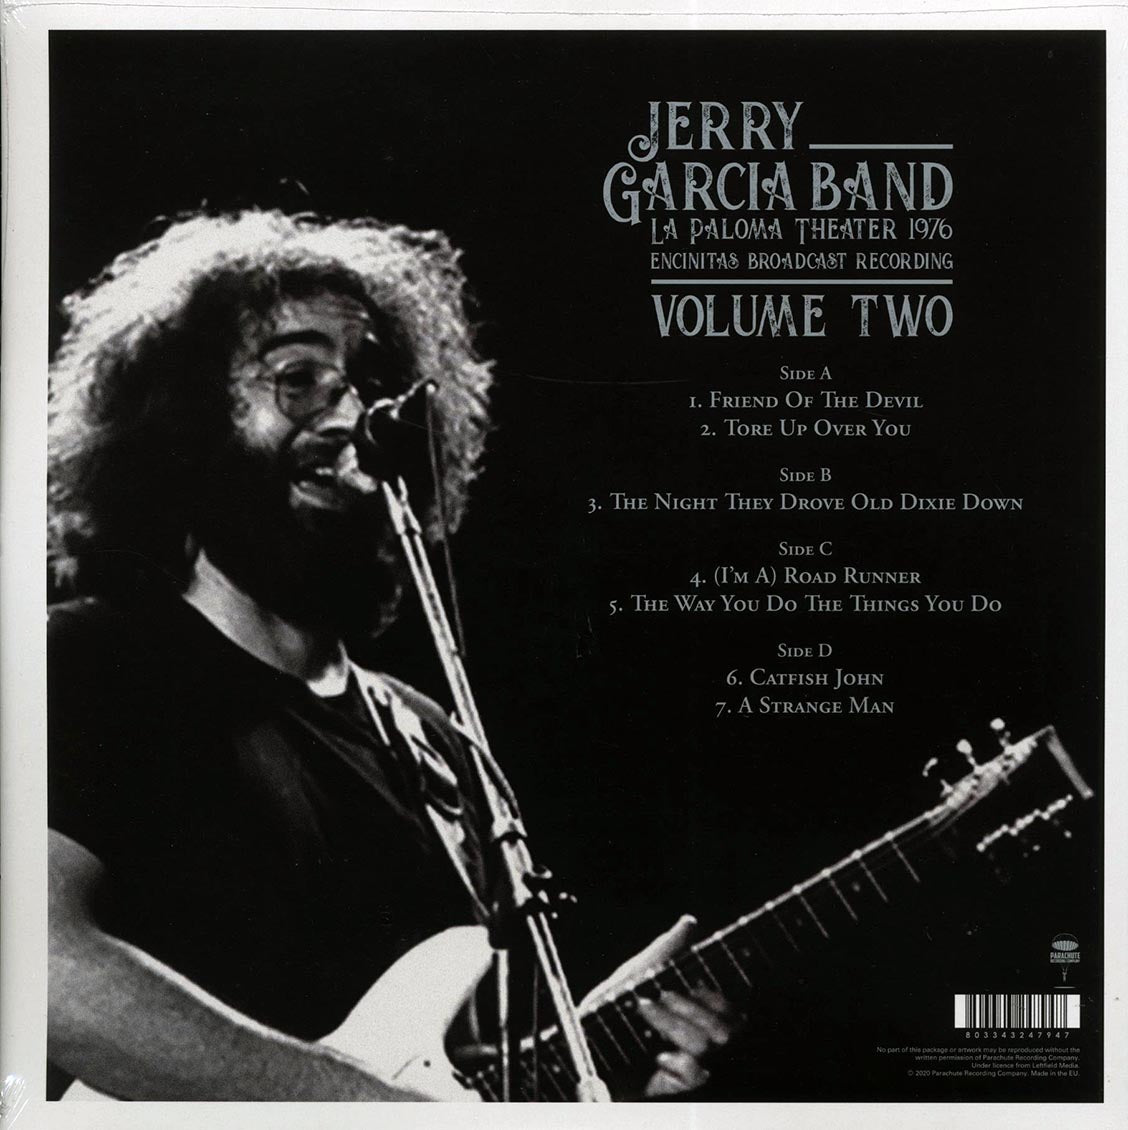 The Jerry Garcia Band - La Paloma Theater 1976 Volume 2: Encinitas Broadcast Recording